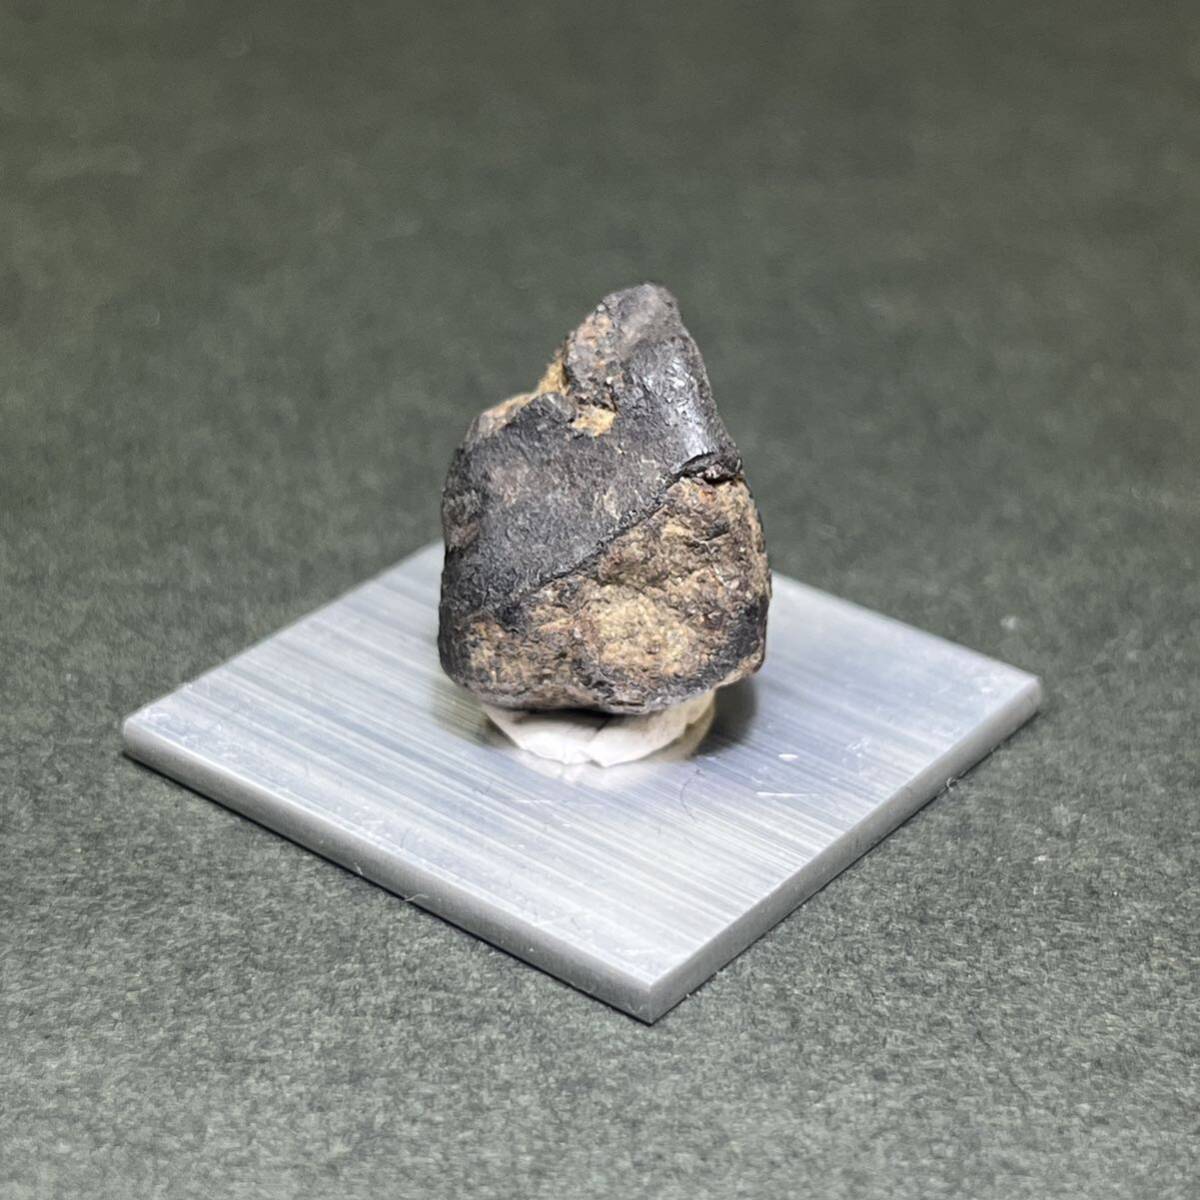  высокое качество * che Rya ведро sk метеорит камень качество метеорит meteor свет метеорит магазин meteor s*240518